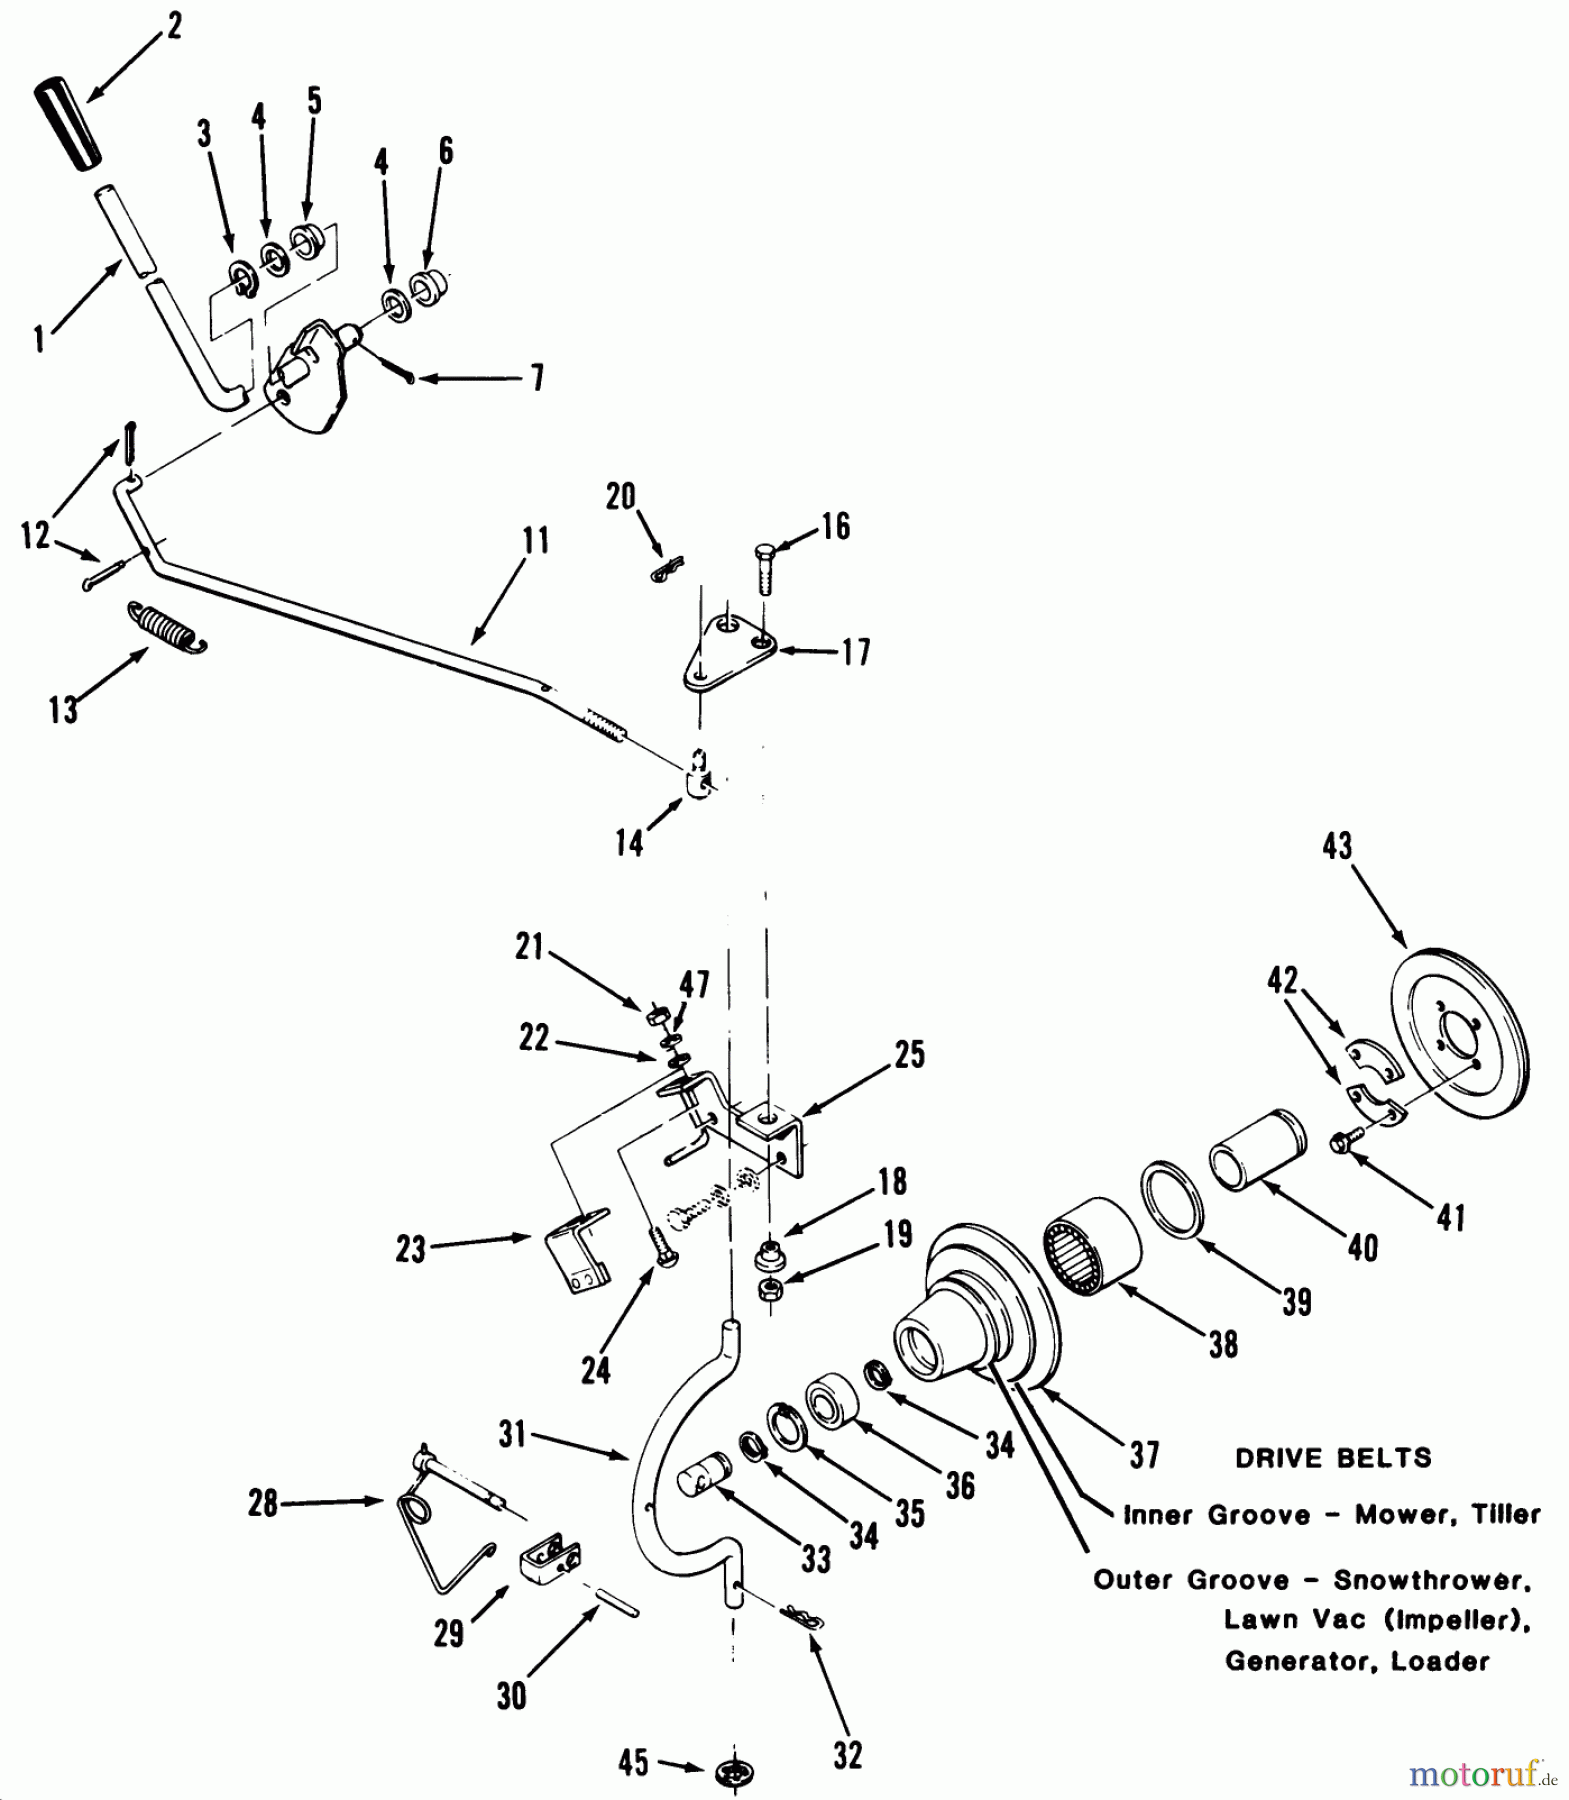  Toro Neu Mowers, Lawn & Garden Tractor Seite 1 51-16OE01 (416-H) - Toro 416-H Garden Tractor, 1991 (1000001-1999999) PTO CLUTCH AND CONTROL